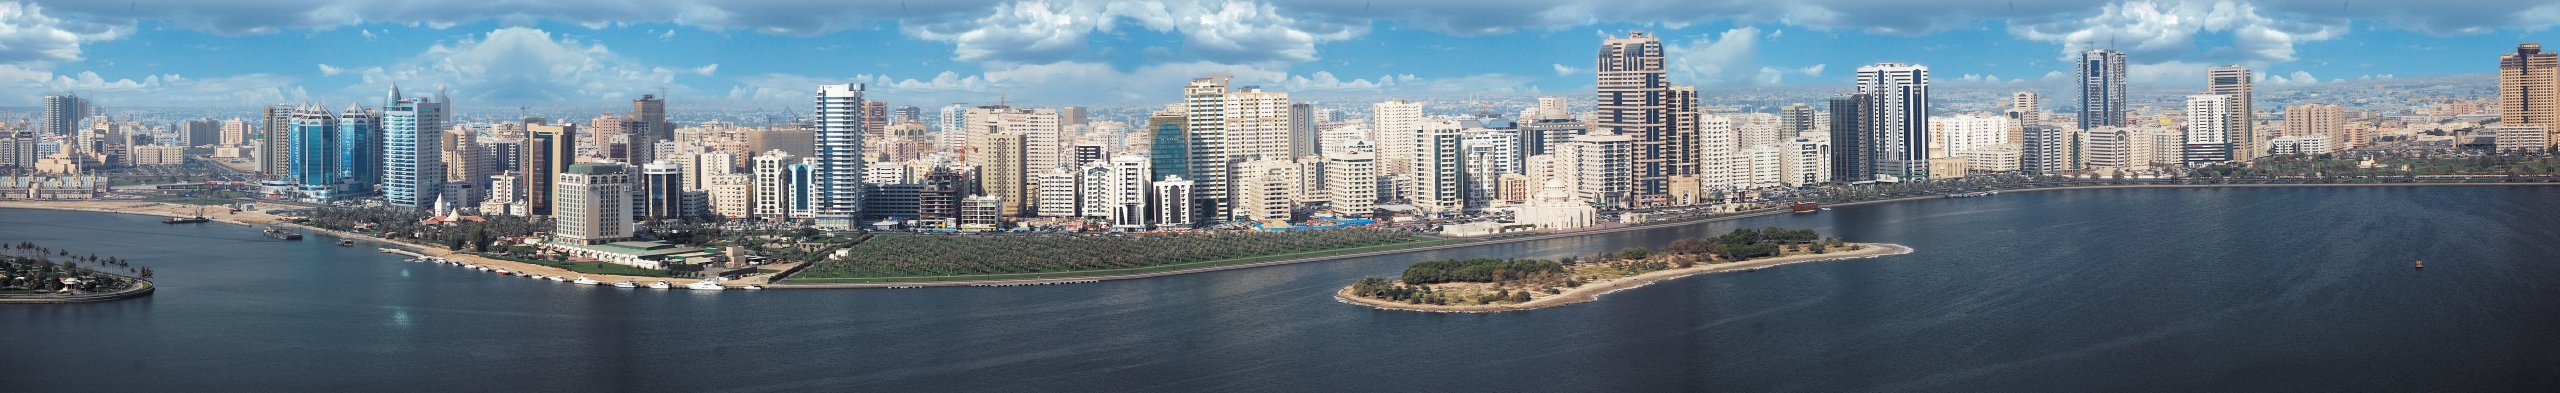 A panoramic photograph of Sharjah, UAE